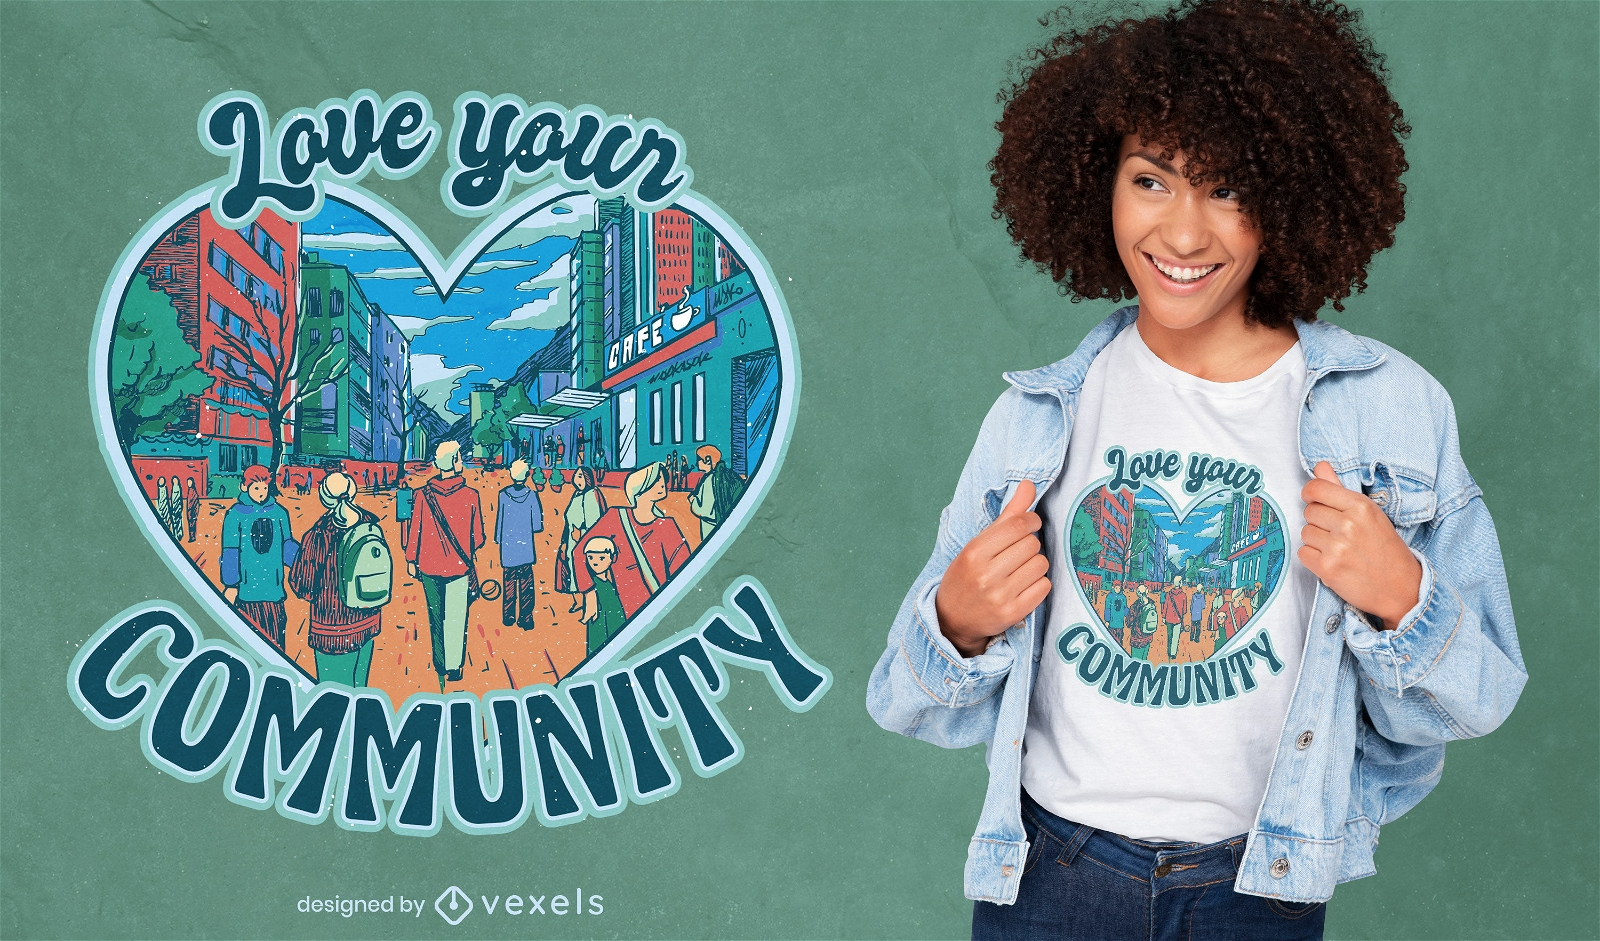 Love your community t-shirt design